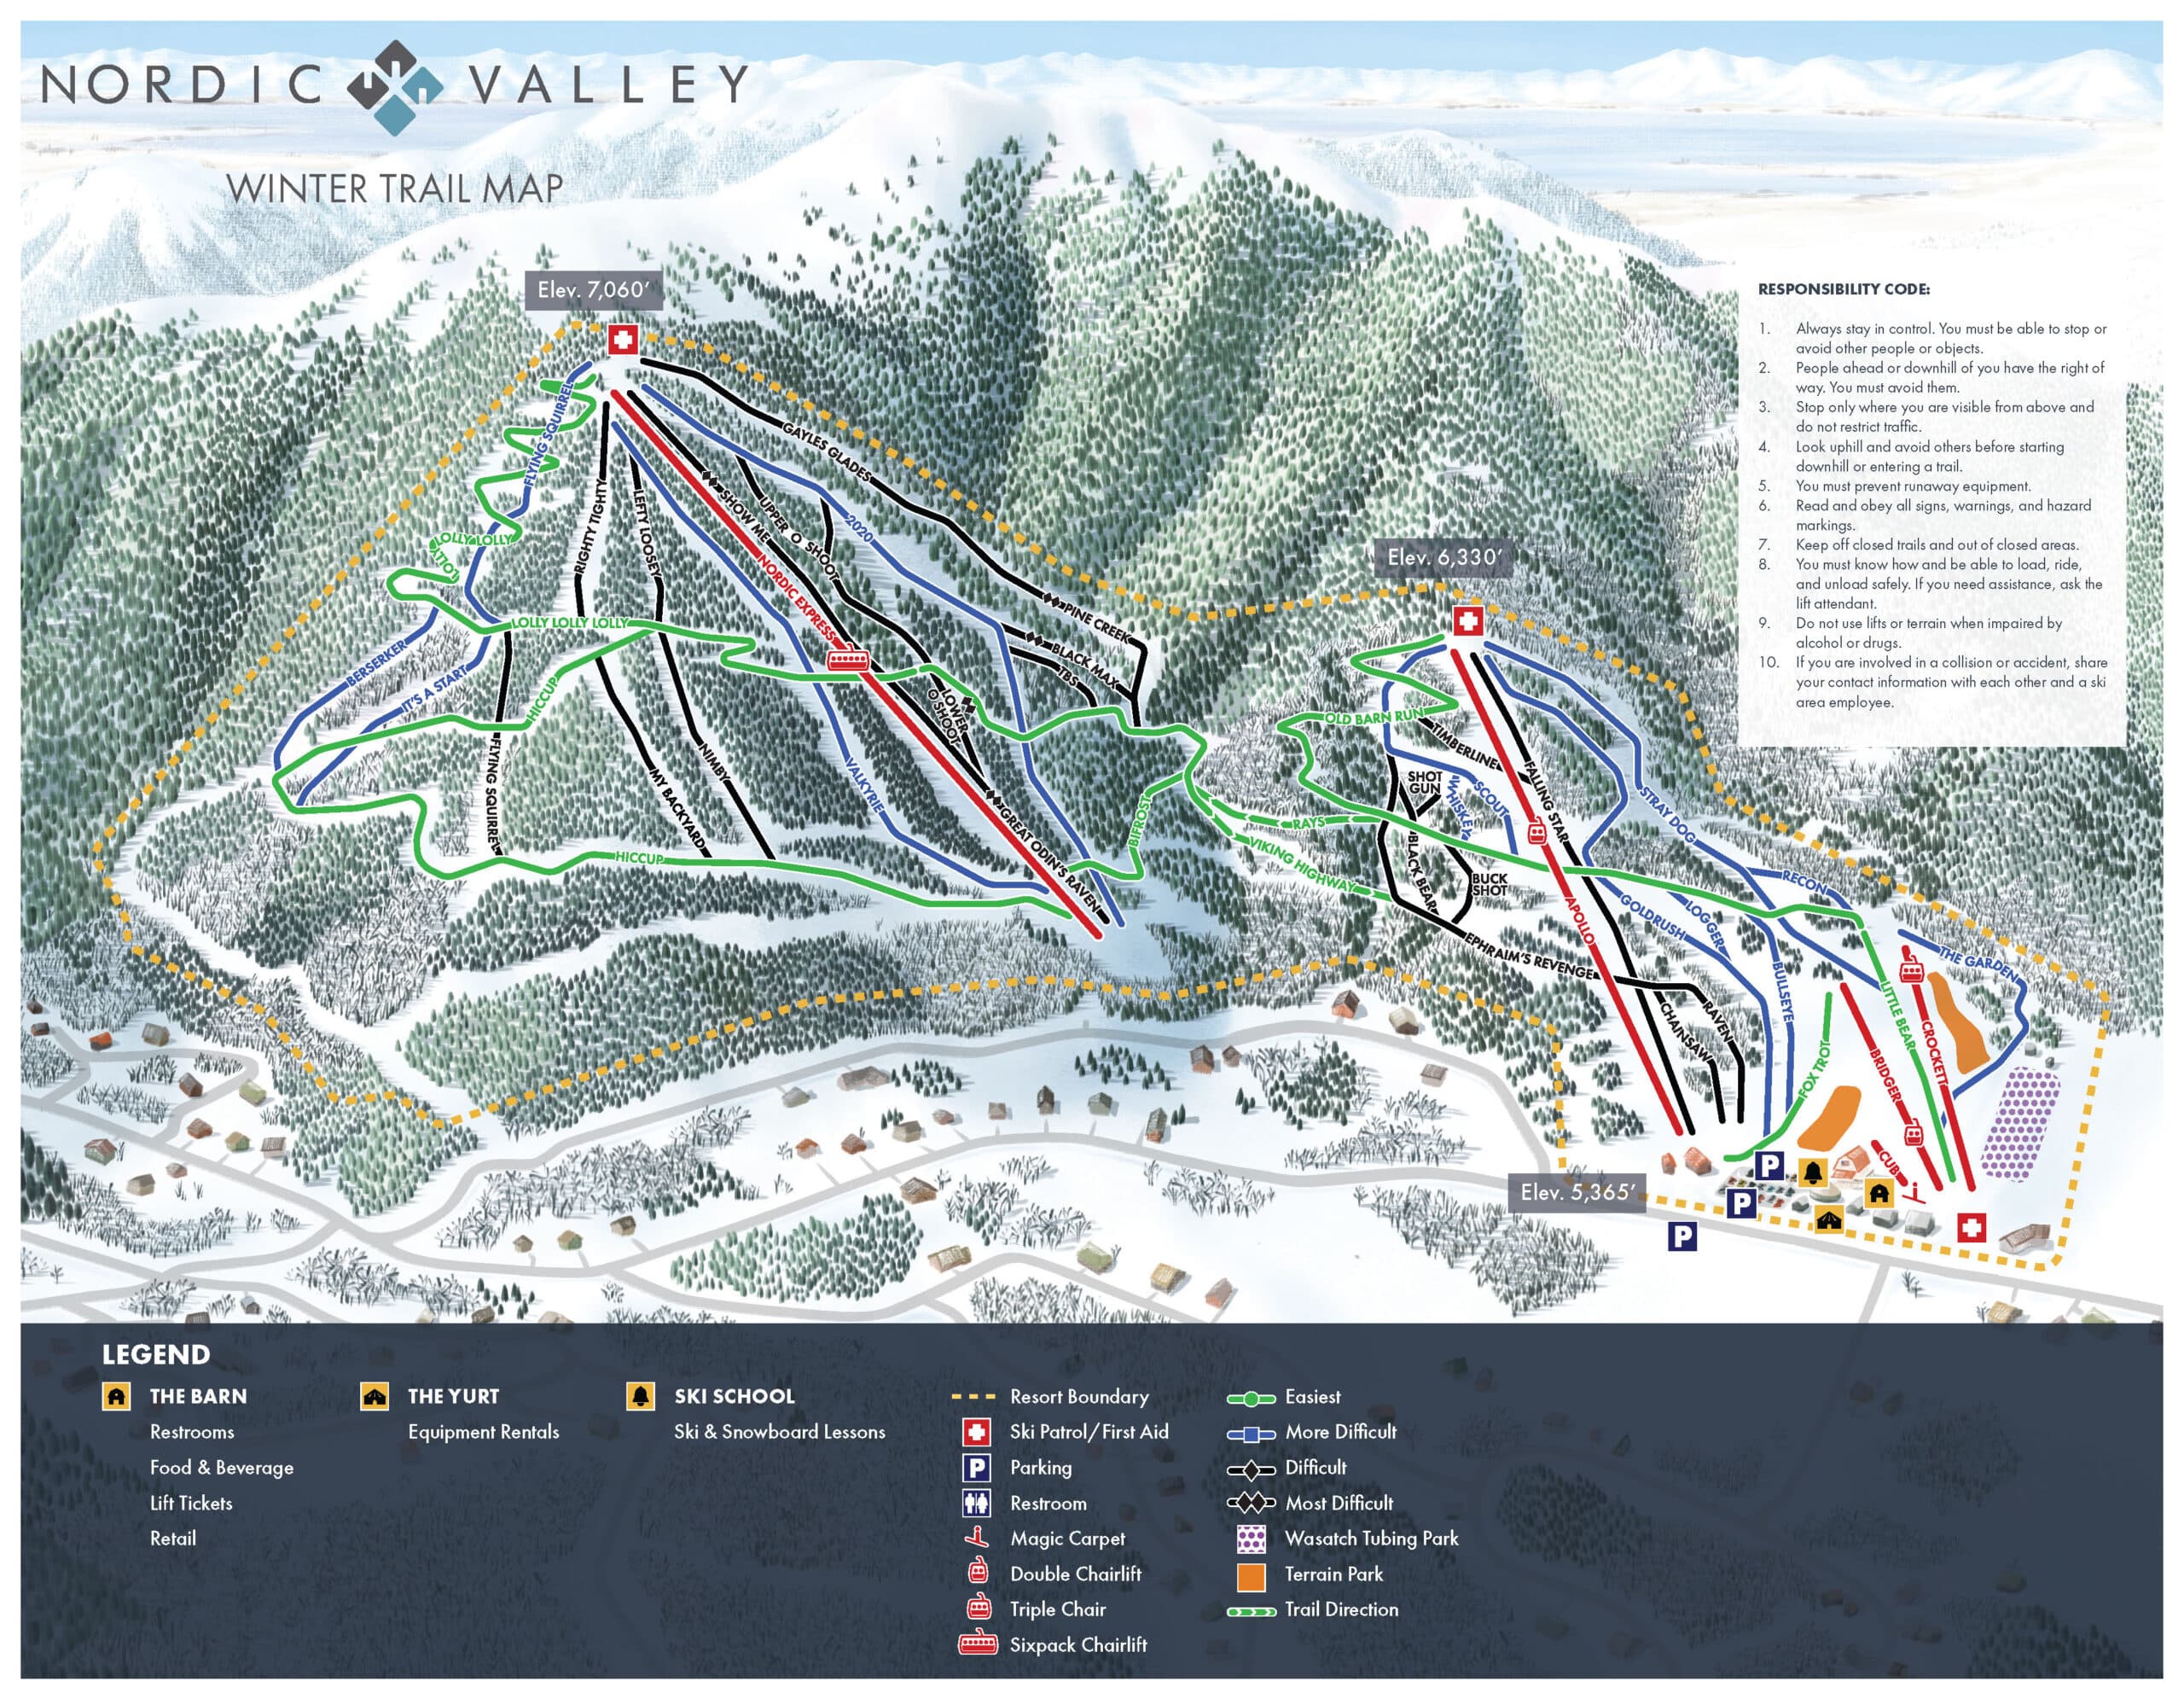 Dry Mountain Trail, Utah - 11 Reviews, Map